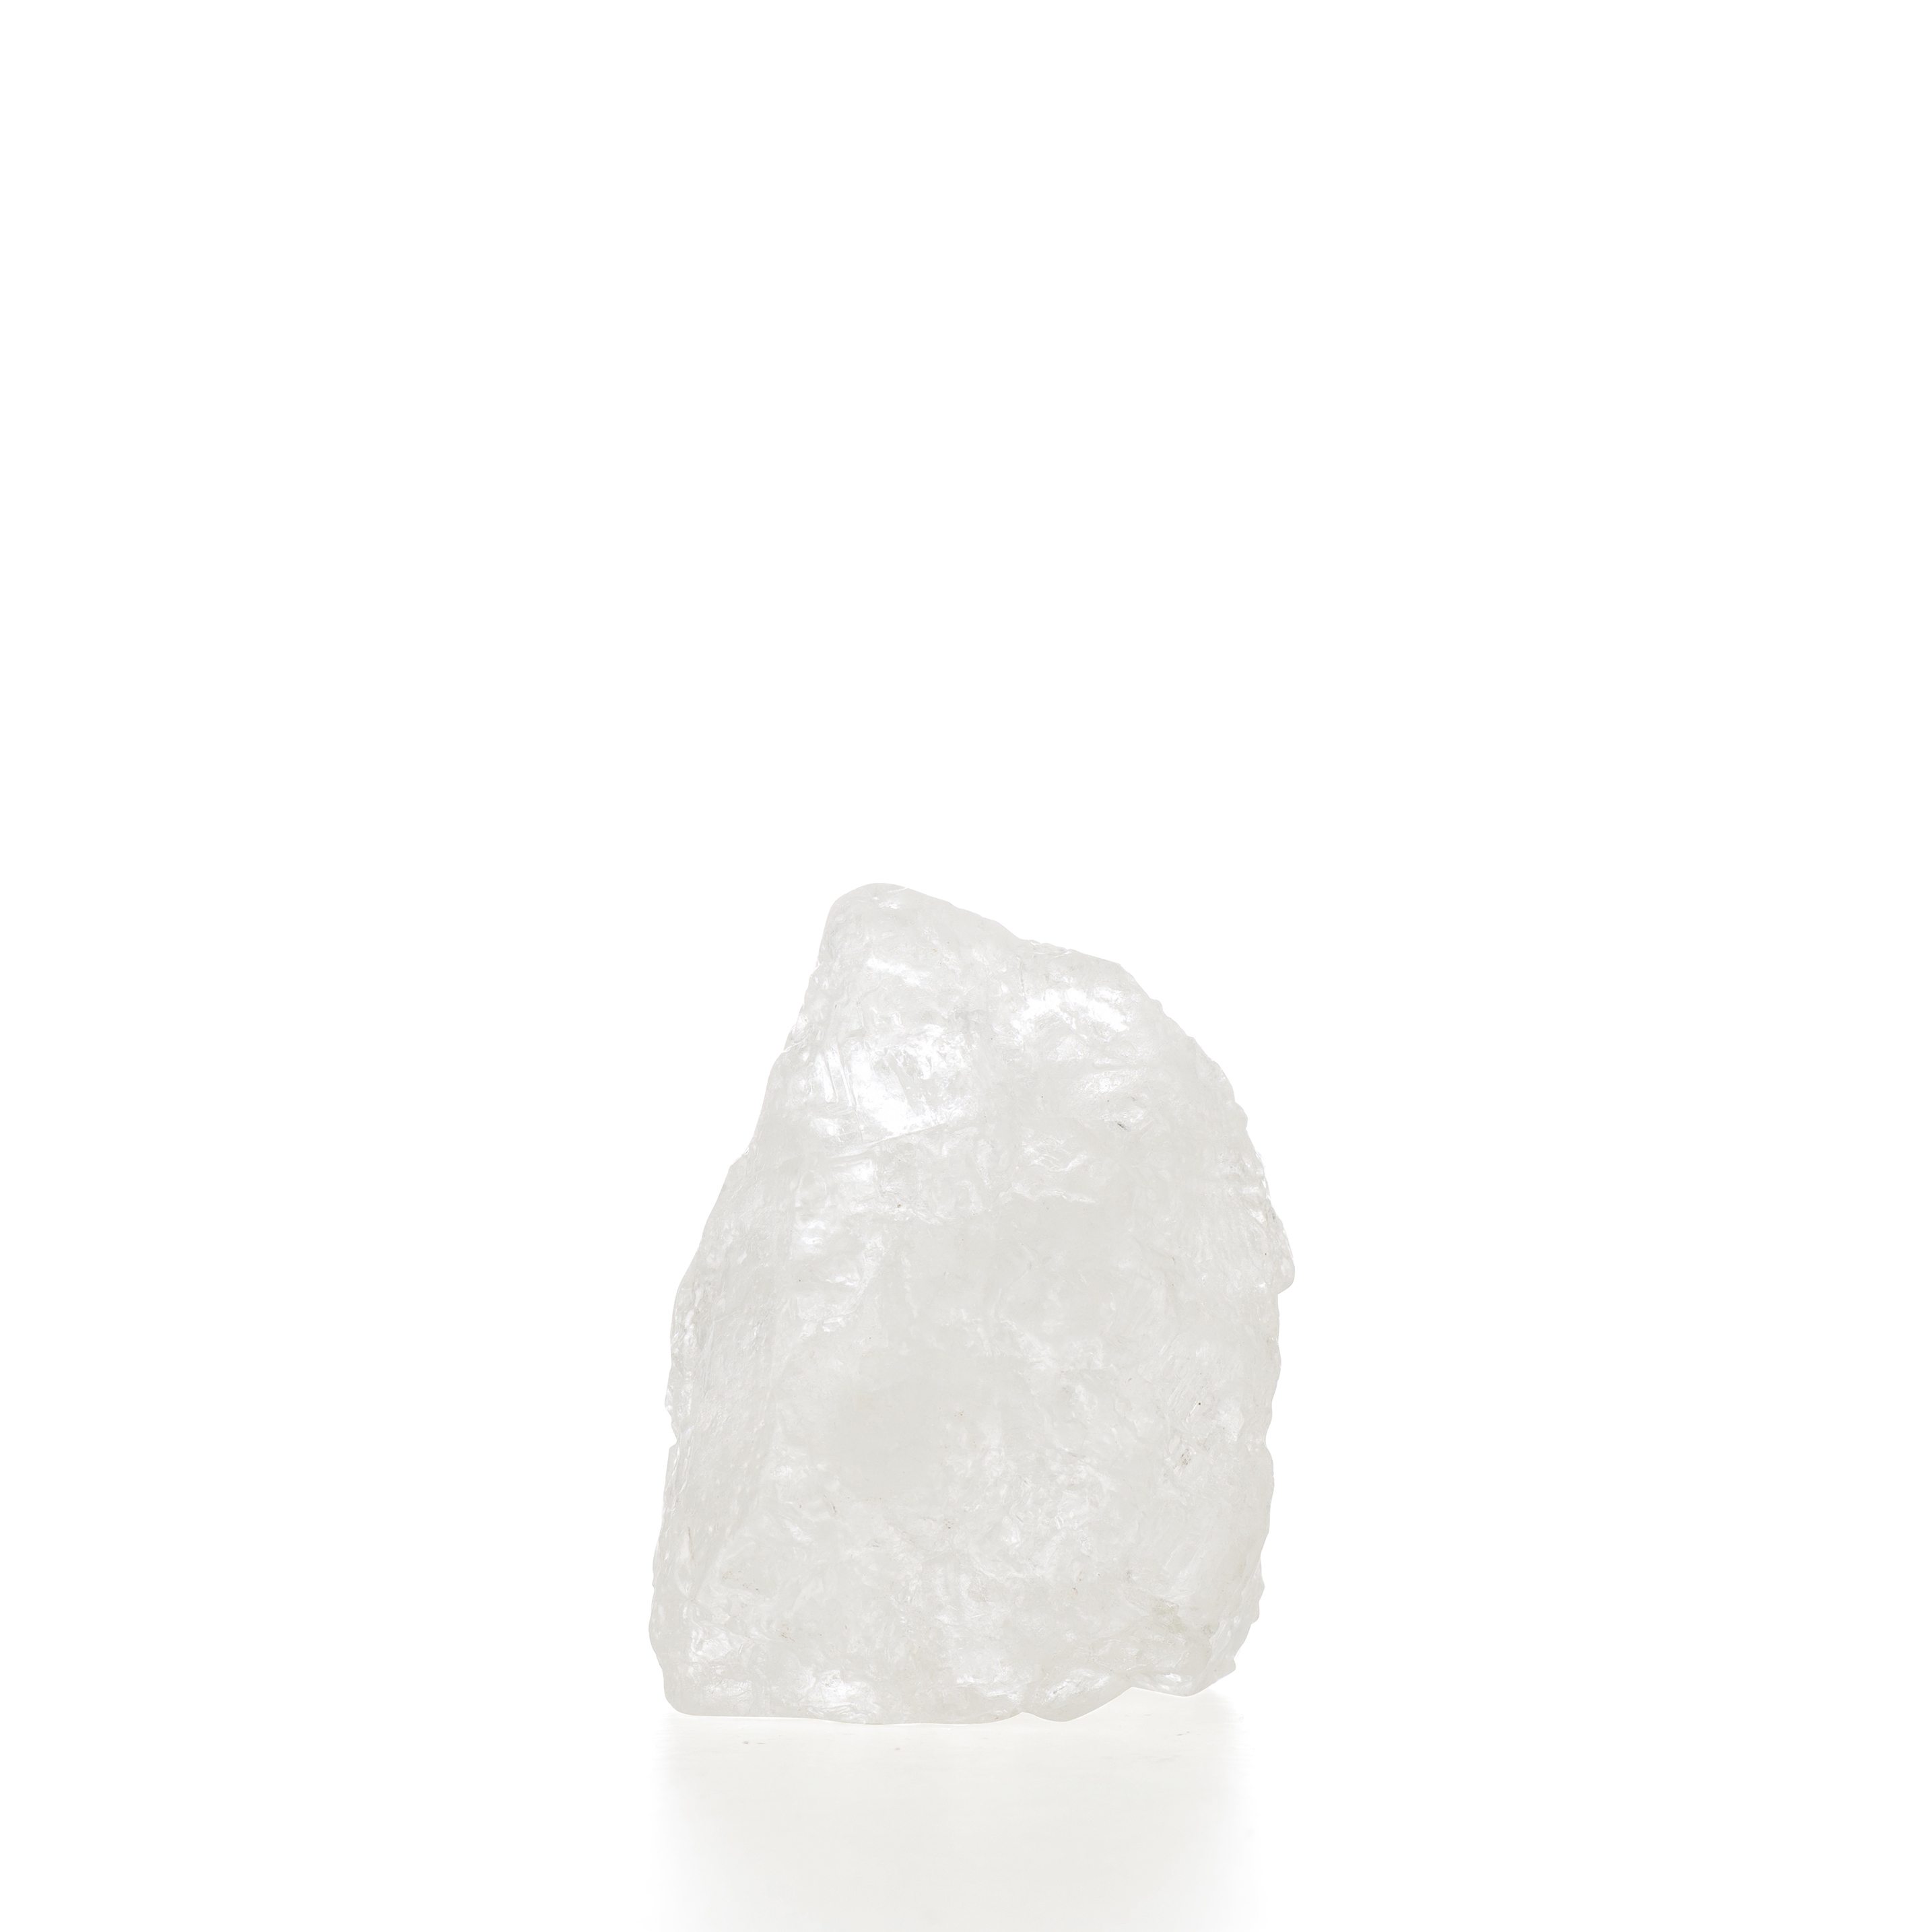 Montagne de cristal de sel naturel, halite ca 240g